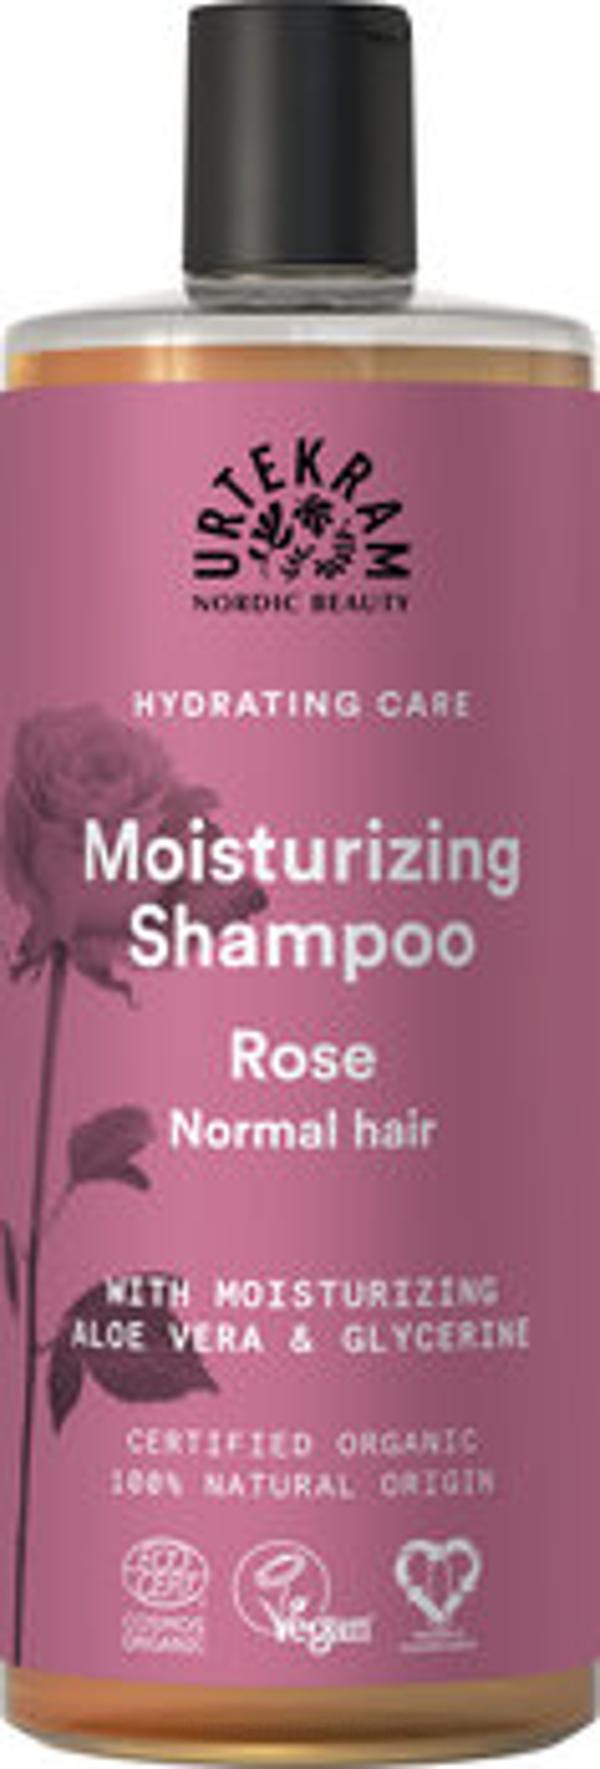 Produktfoto zu Shampoo Rose 500 ml